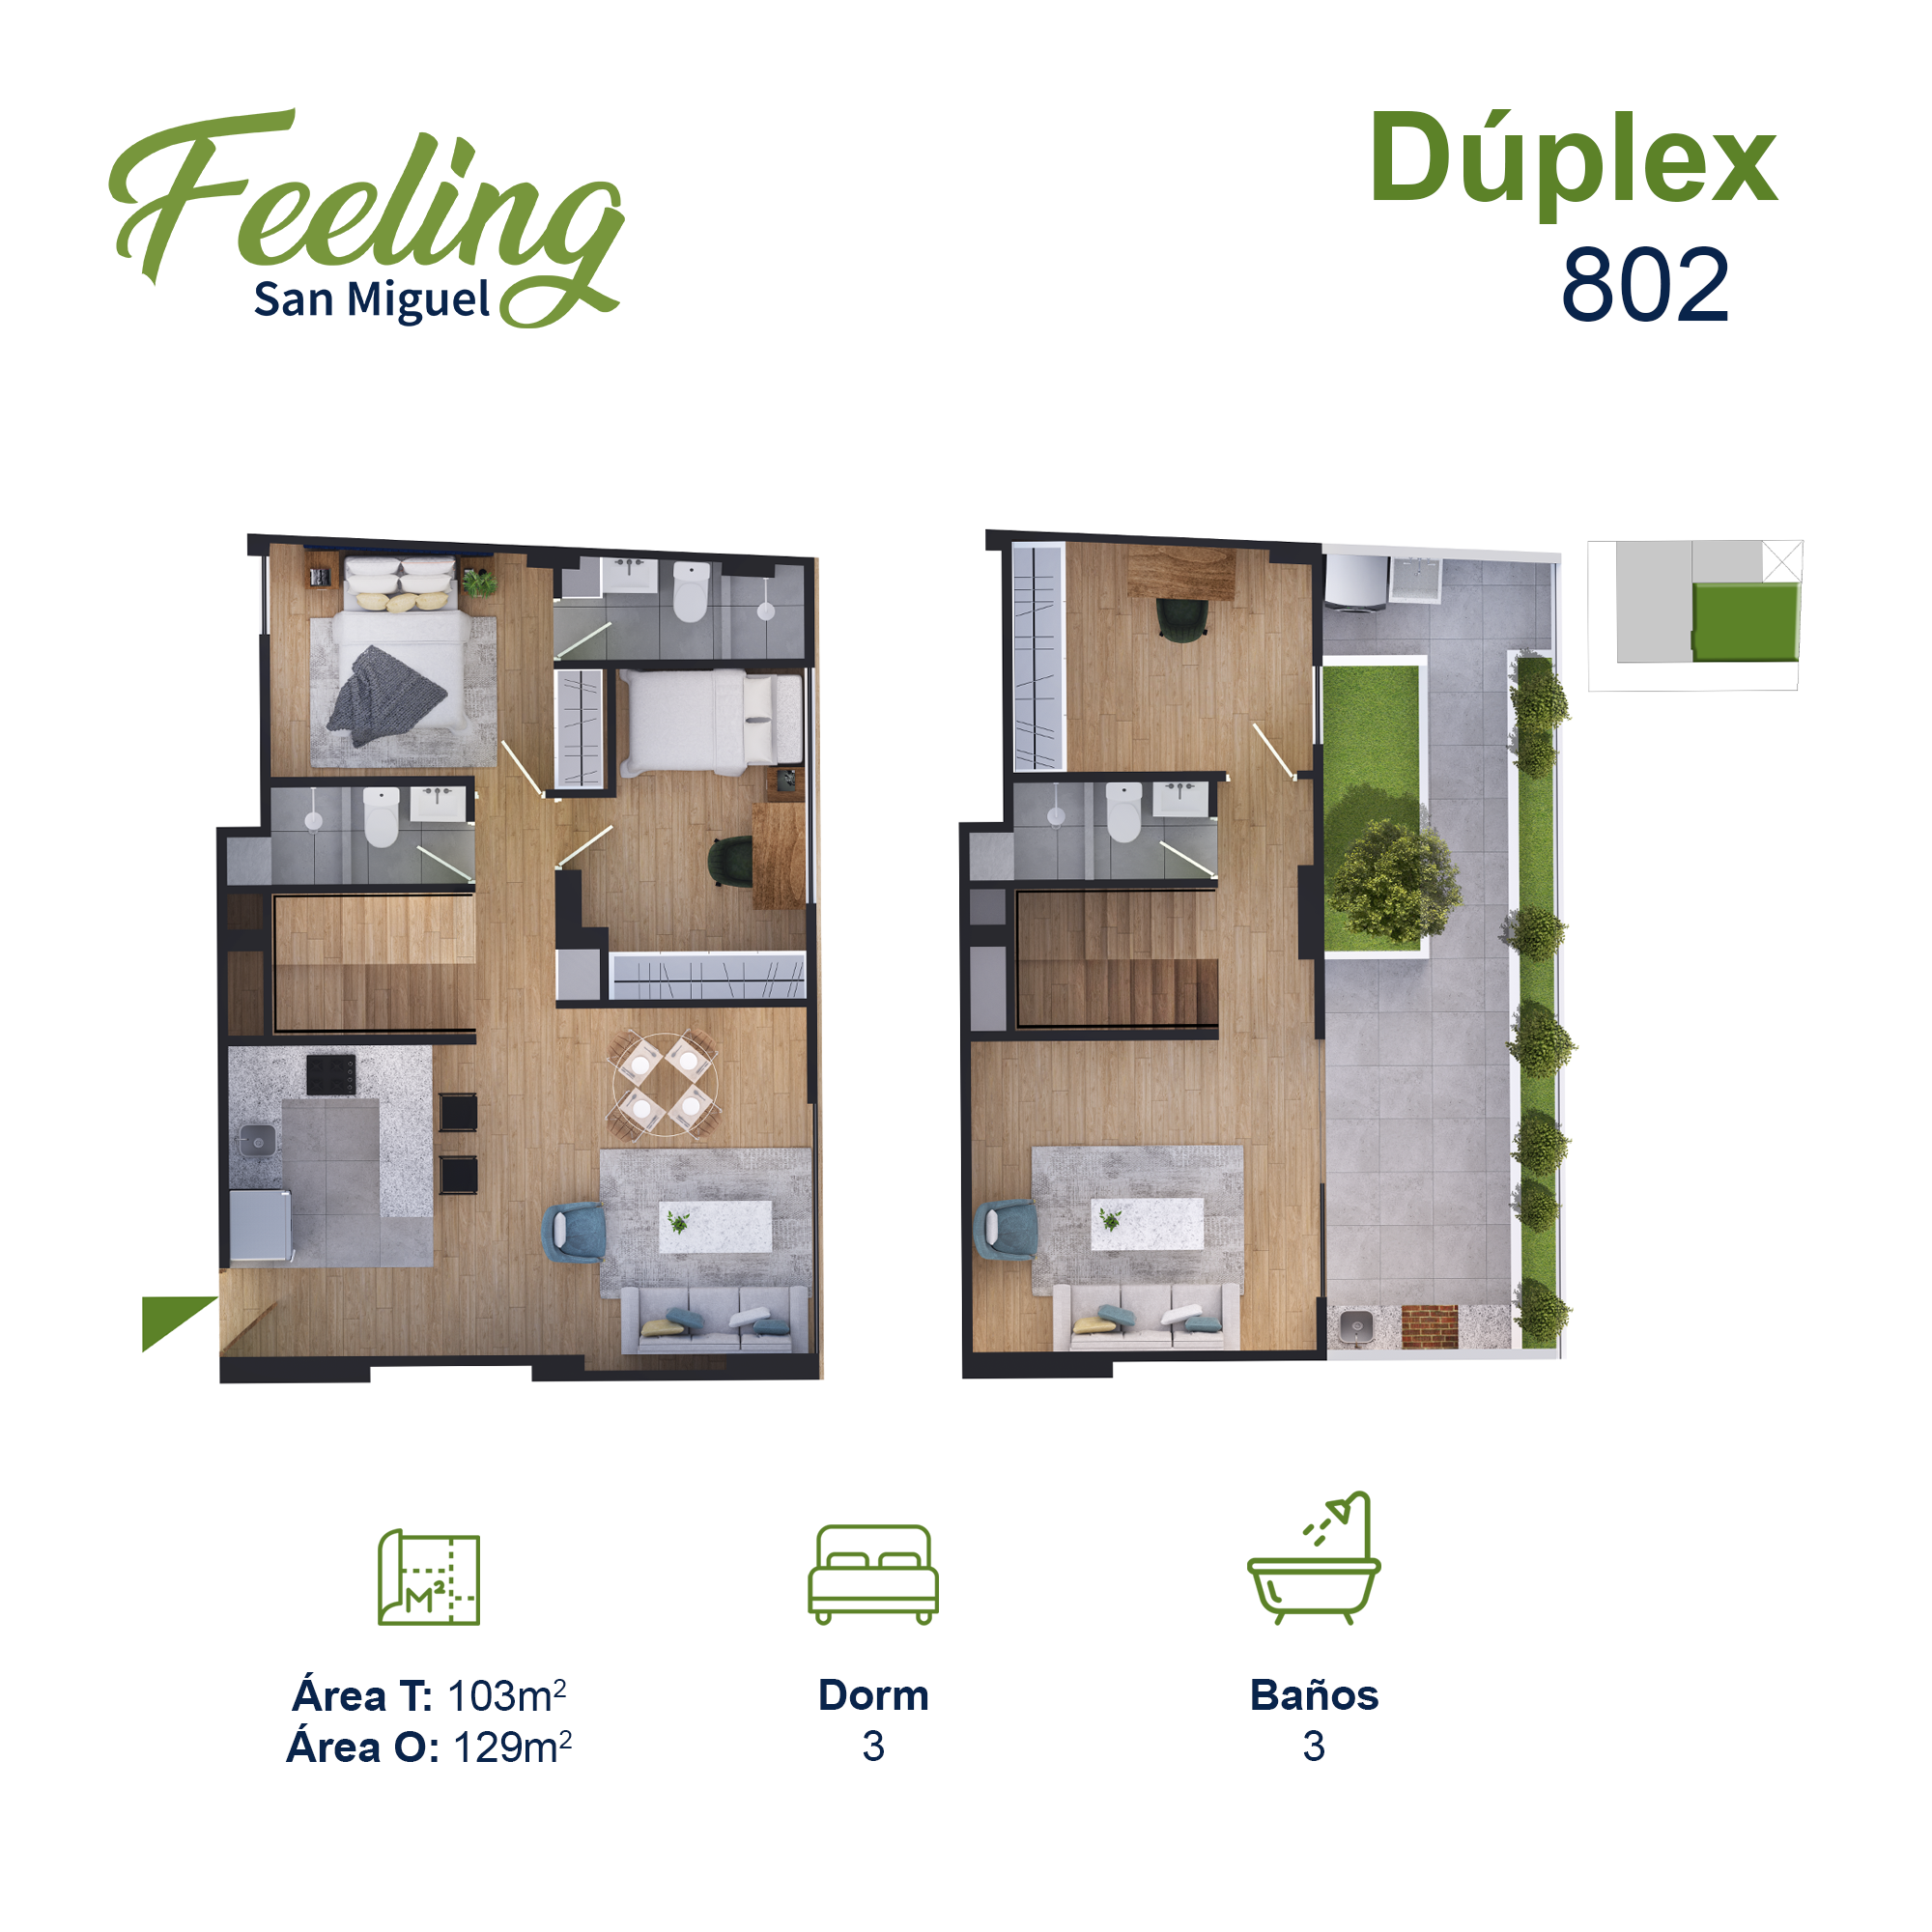 Duplex 802 Feeling San Miguel